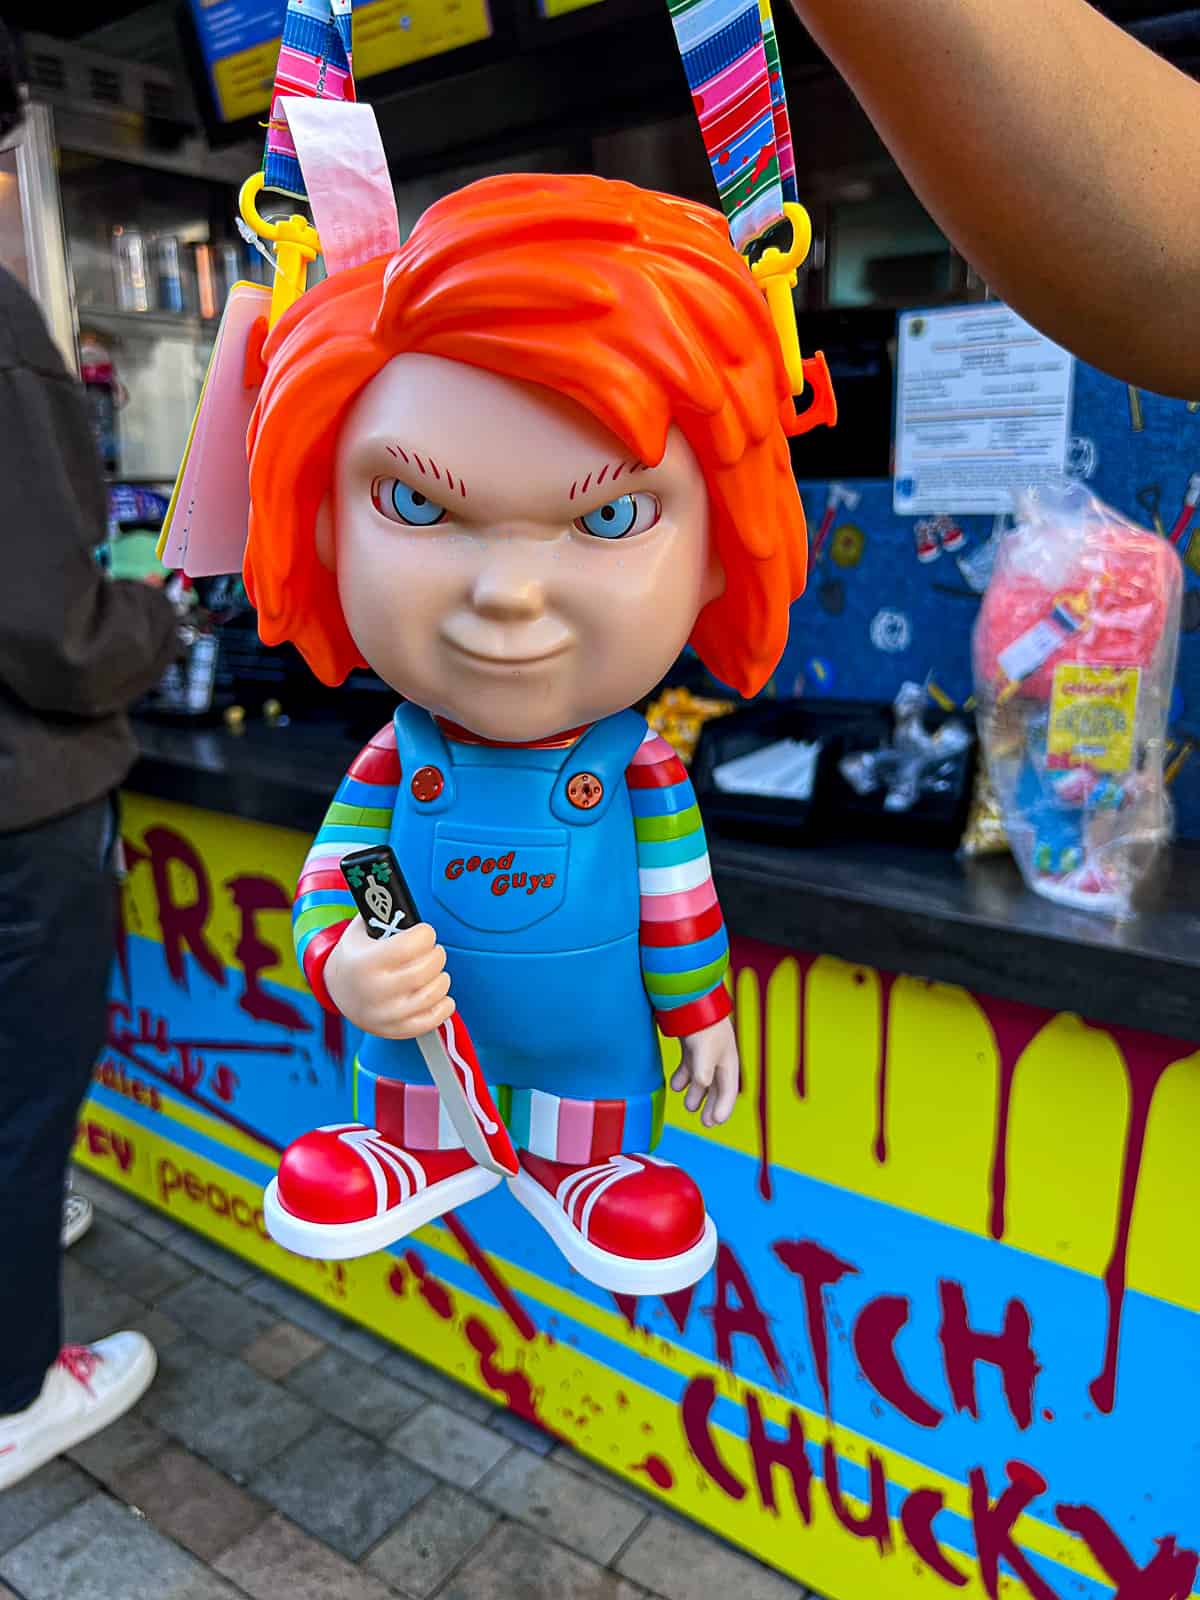 Holding a Universal Studios Chucky Popcorn Holder from Halloween Horror Nights